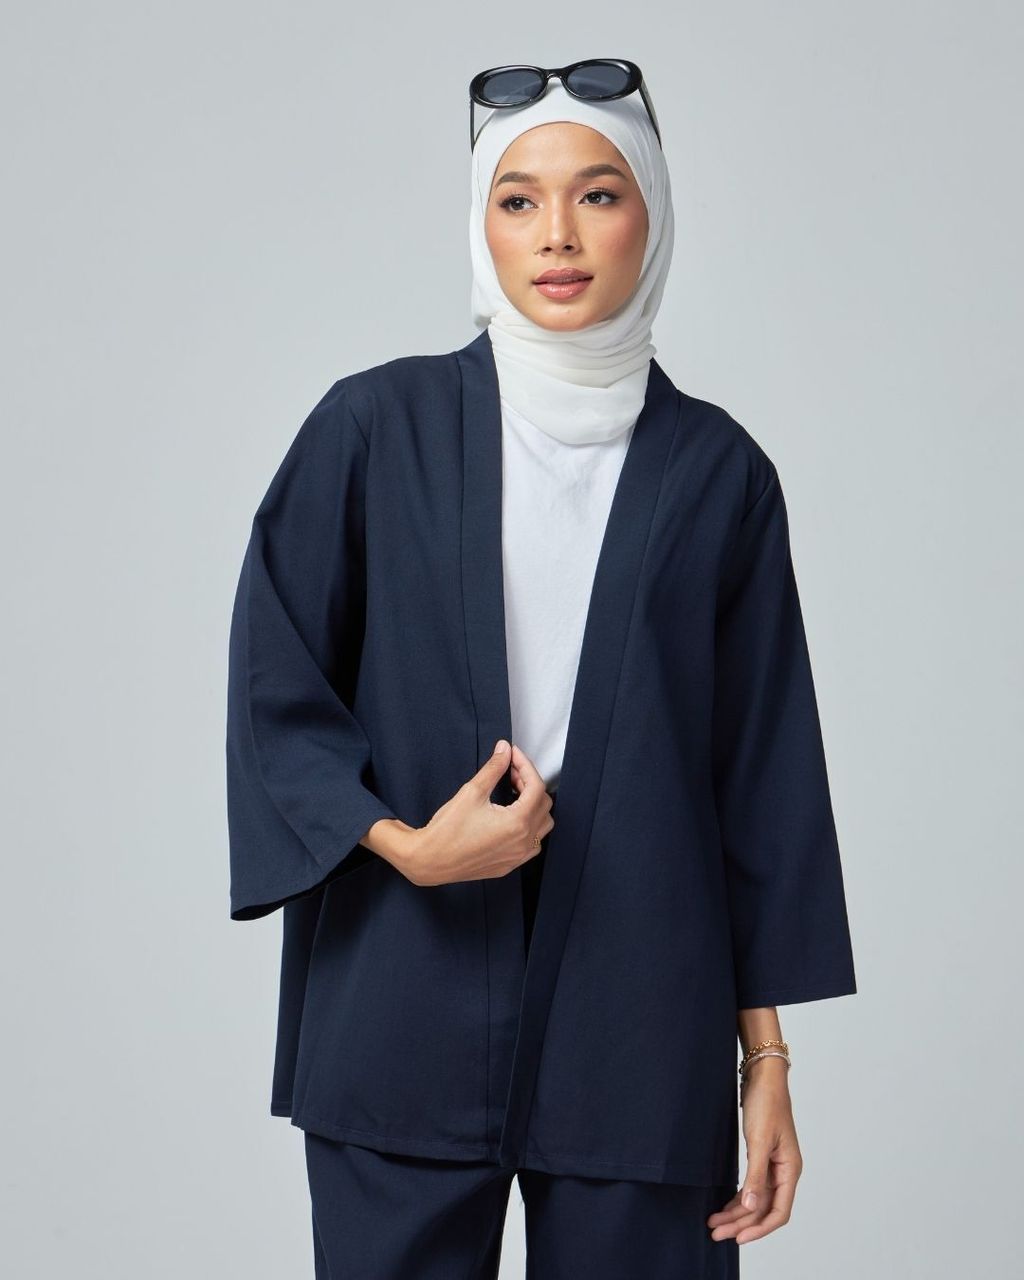 haura-wear-cotton-baju-muslimah-set-seluar-set-skirt-suit-muslimah-set-baju-dan-seluar-muslimah-palazzo (4)